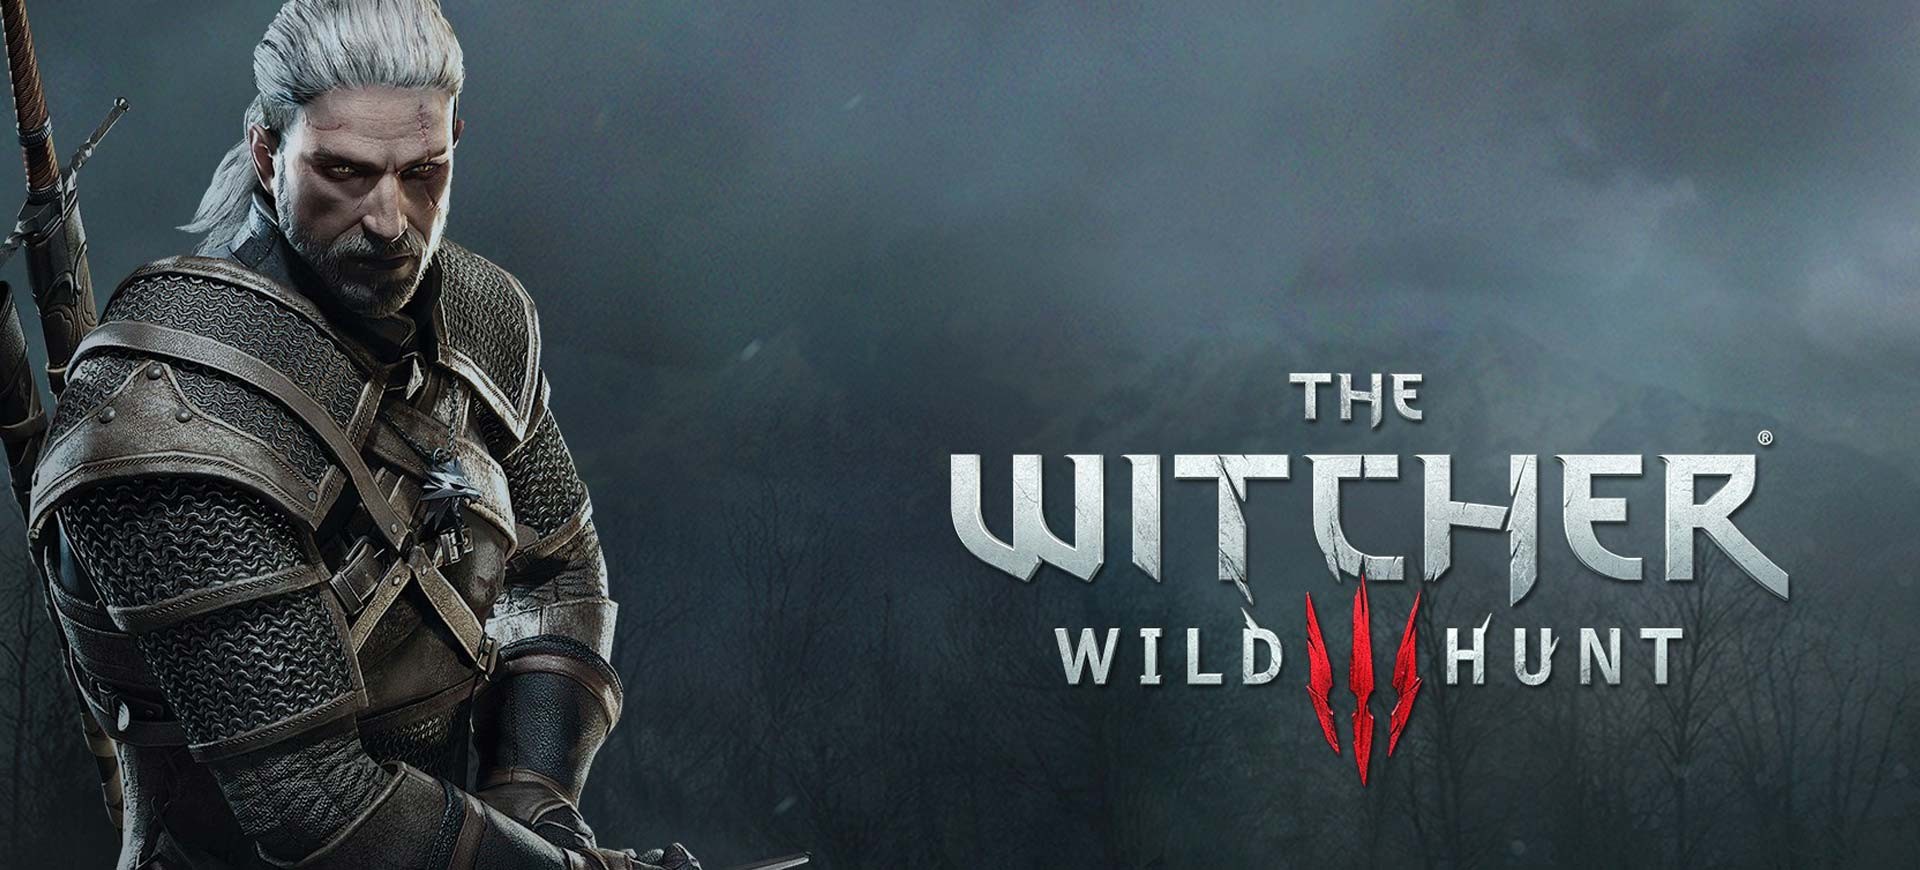 game-infographic-witcher-3-wild-hunt-co-gi-dac-biet